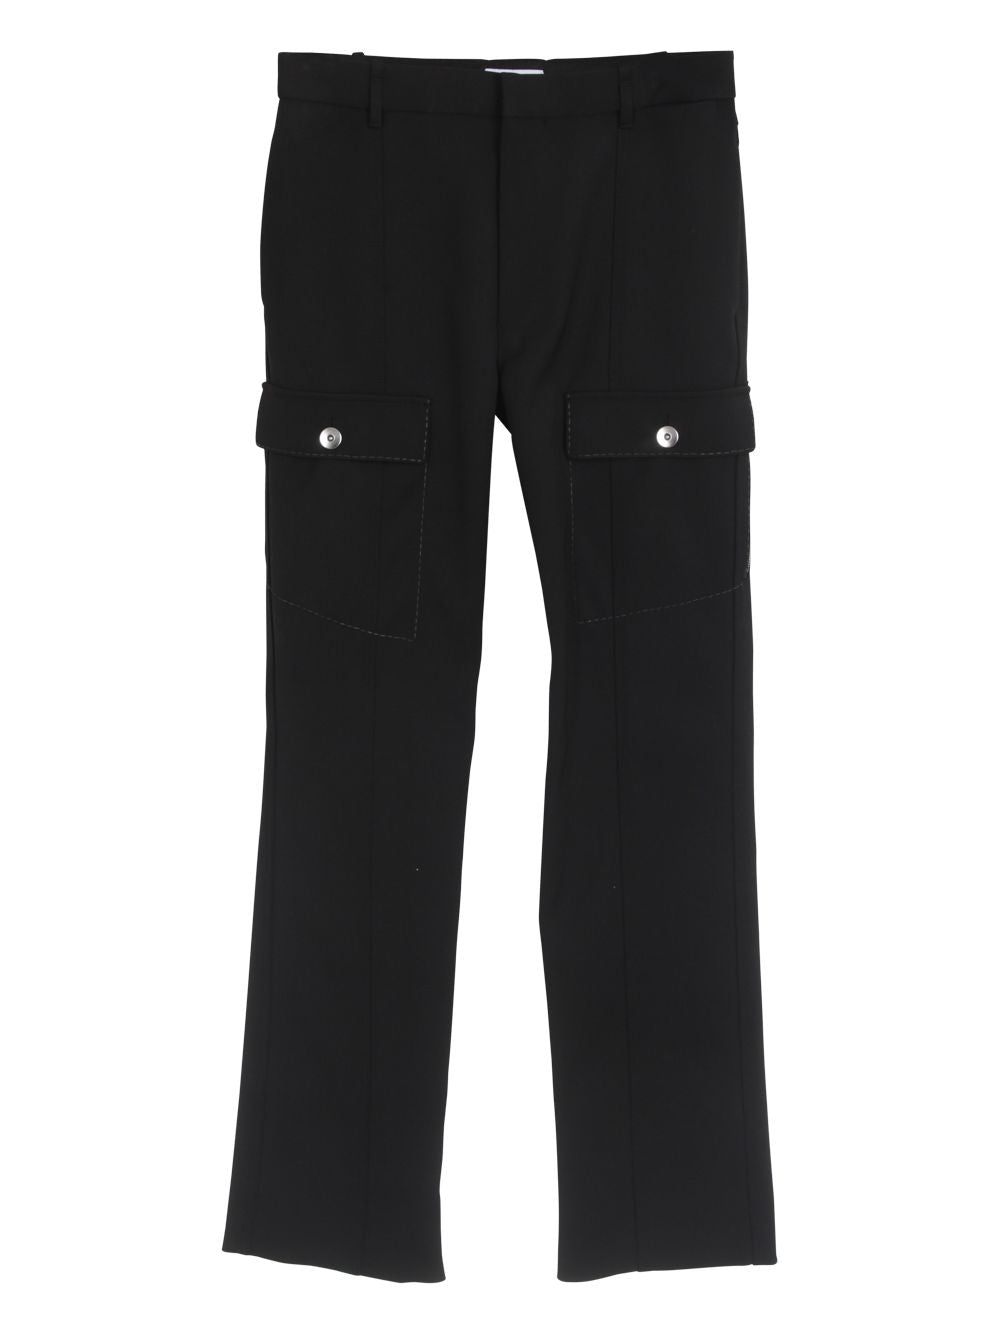 Black Slit Hem Cargo Pants for Women - FW21 Collection